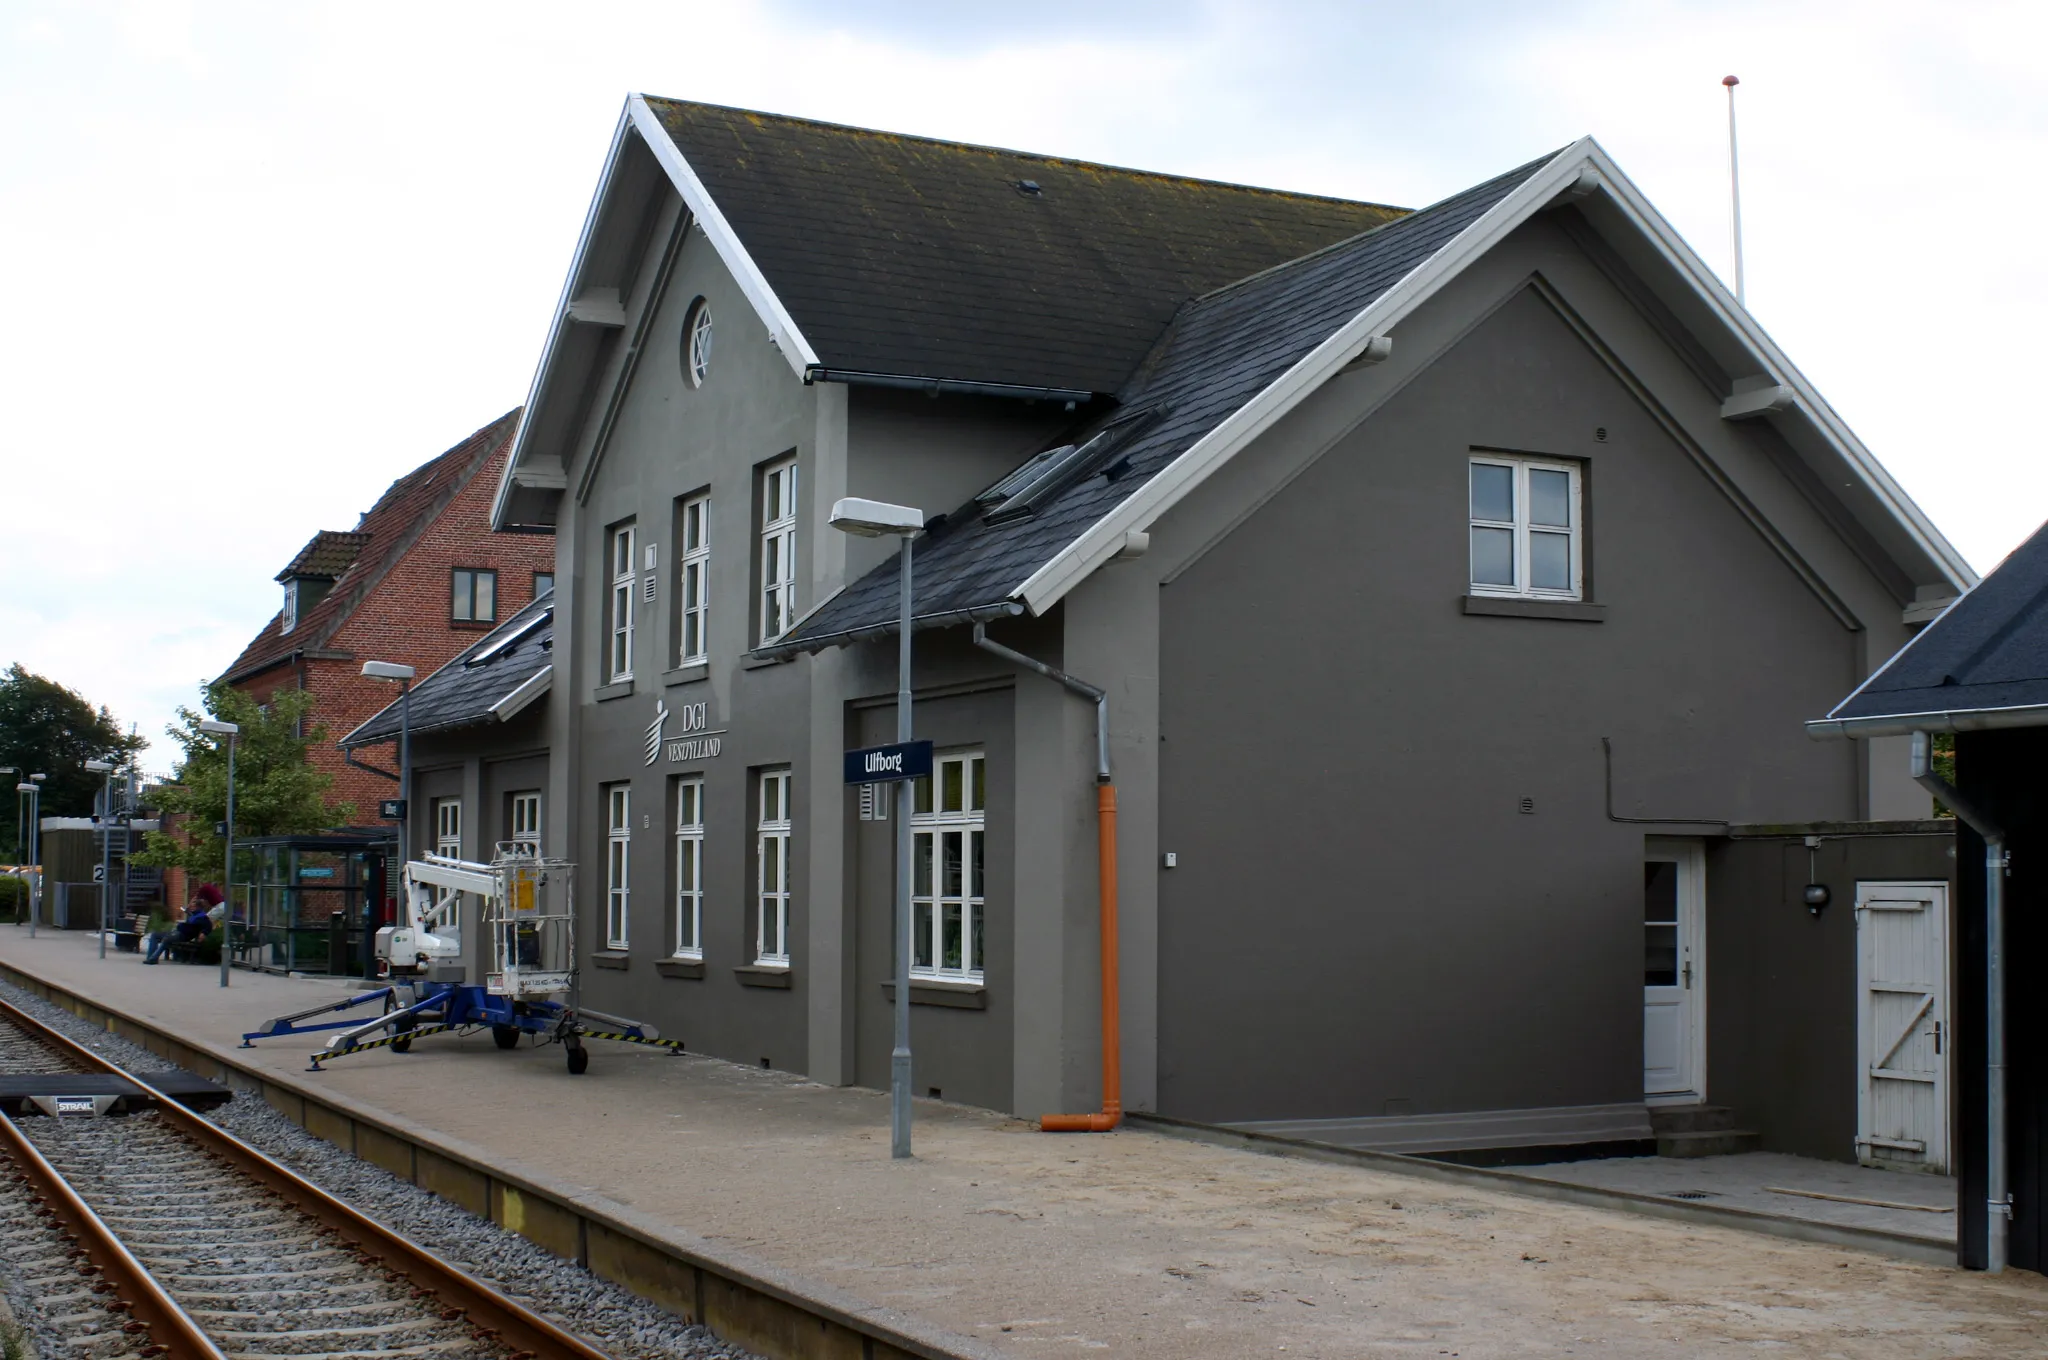 Photo showing: Ulfborg railway station in Denmark